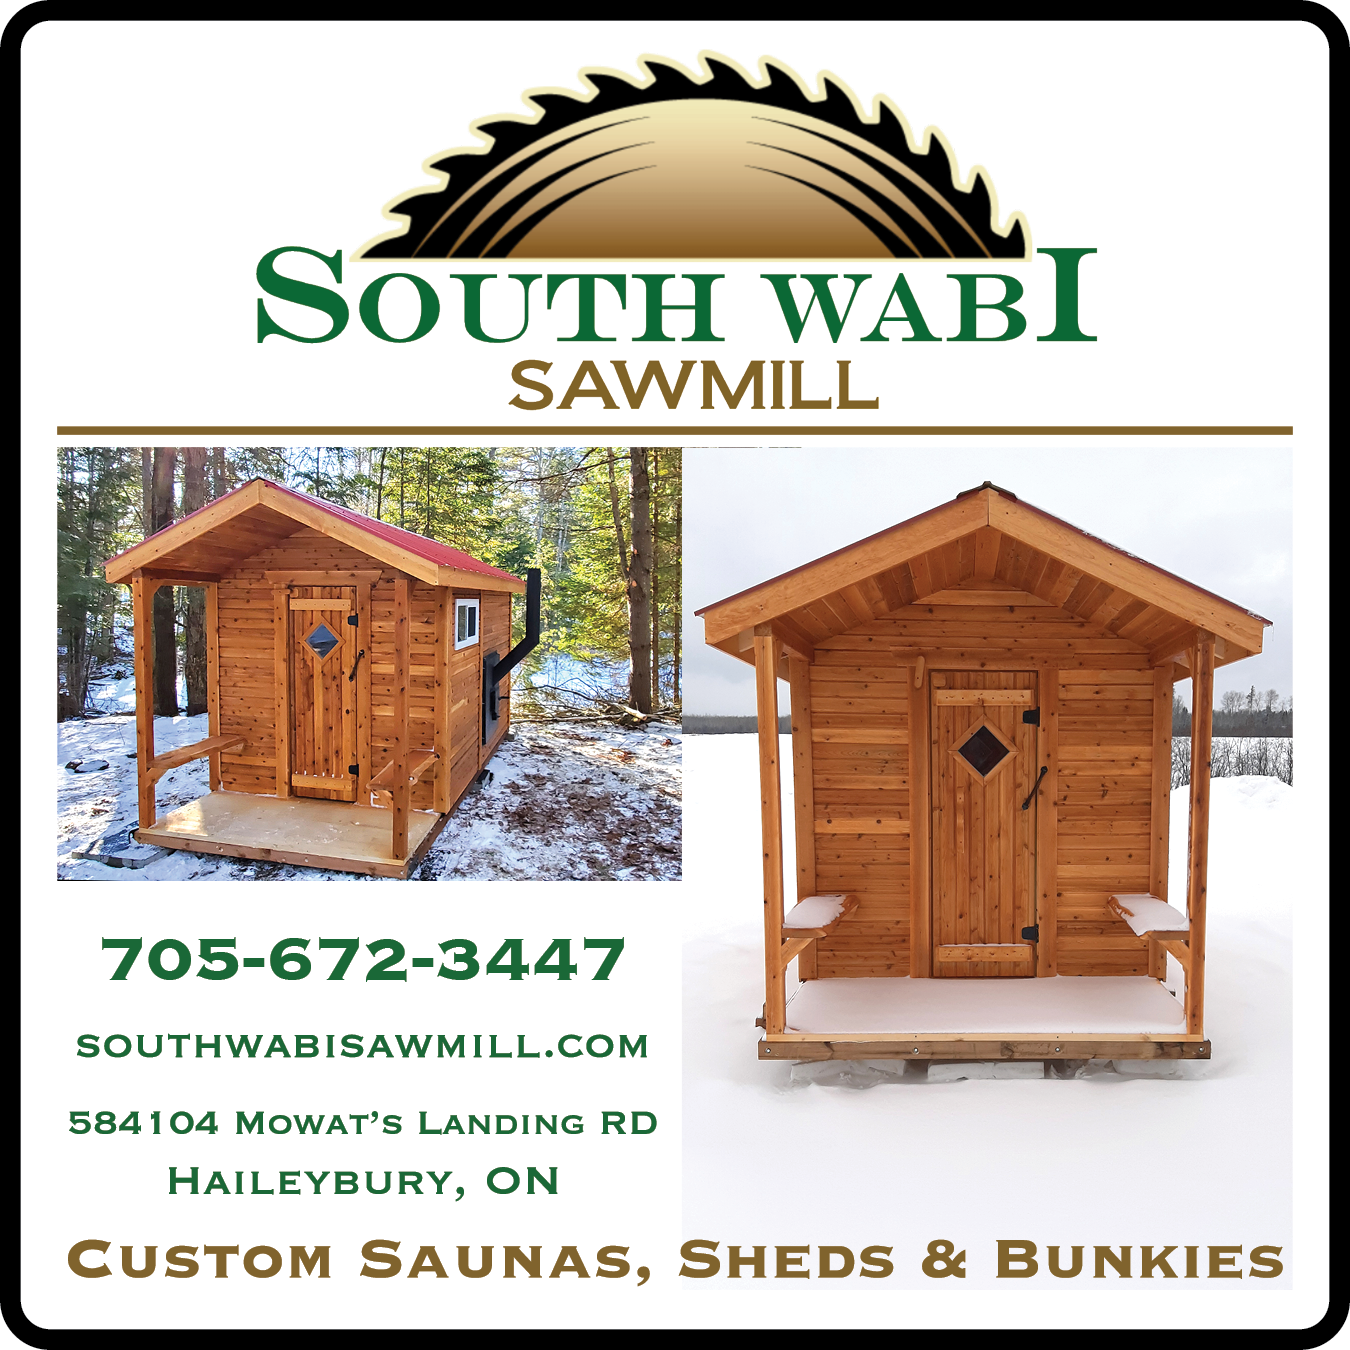 South Wabi Sawmill